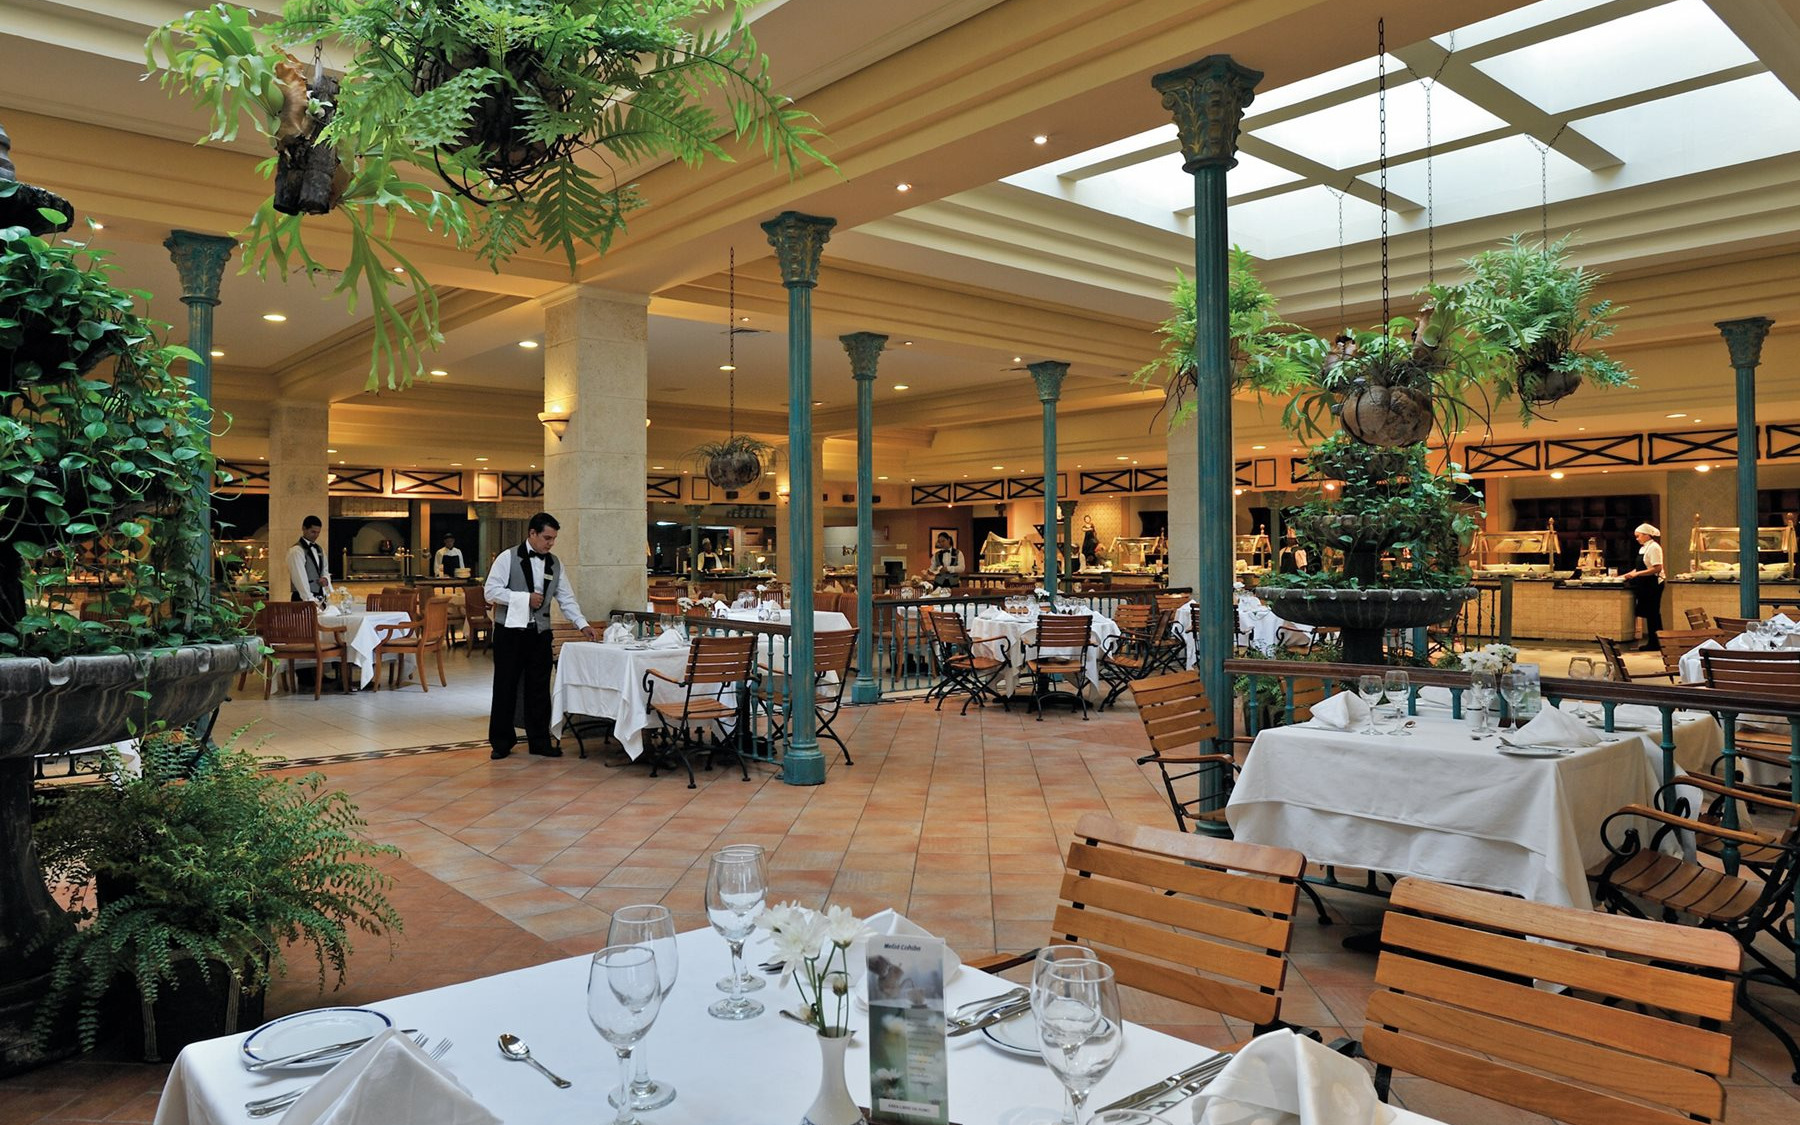 Cedrano restaurant